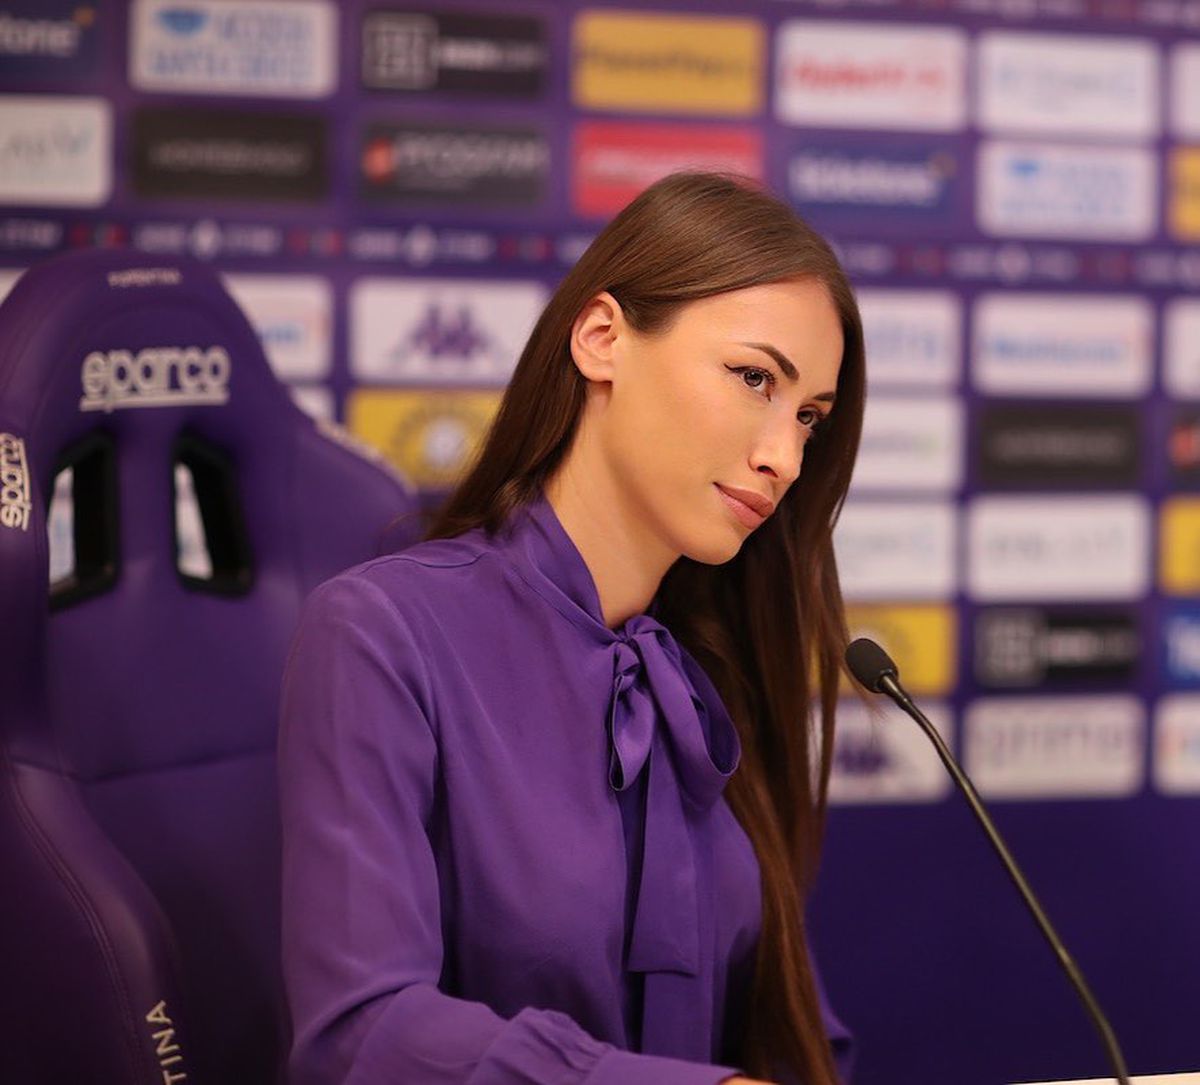 Rossella Petrillo, ofițerul media de la Fiorentina